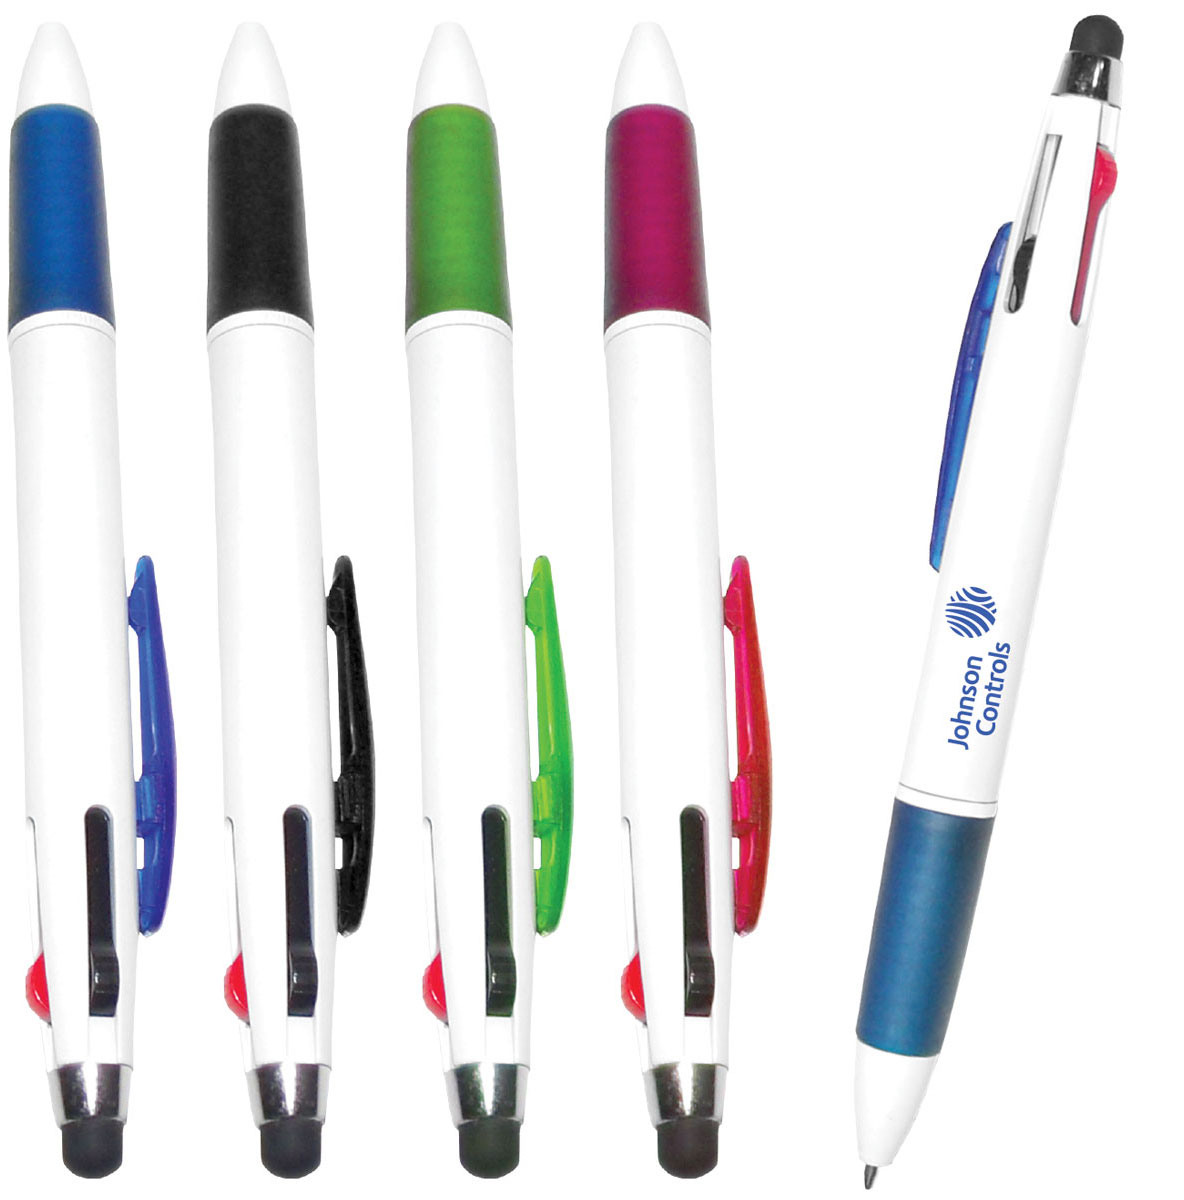 3 in 1 Multi-Colors Stylus Pen